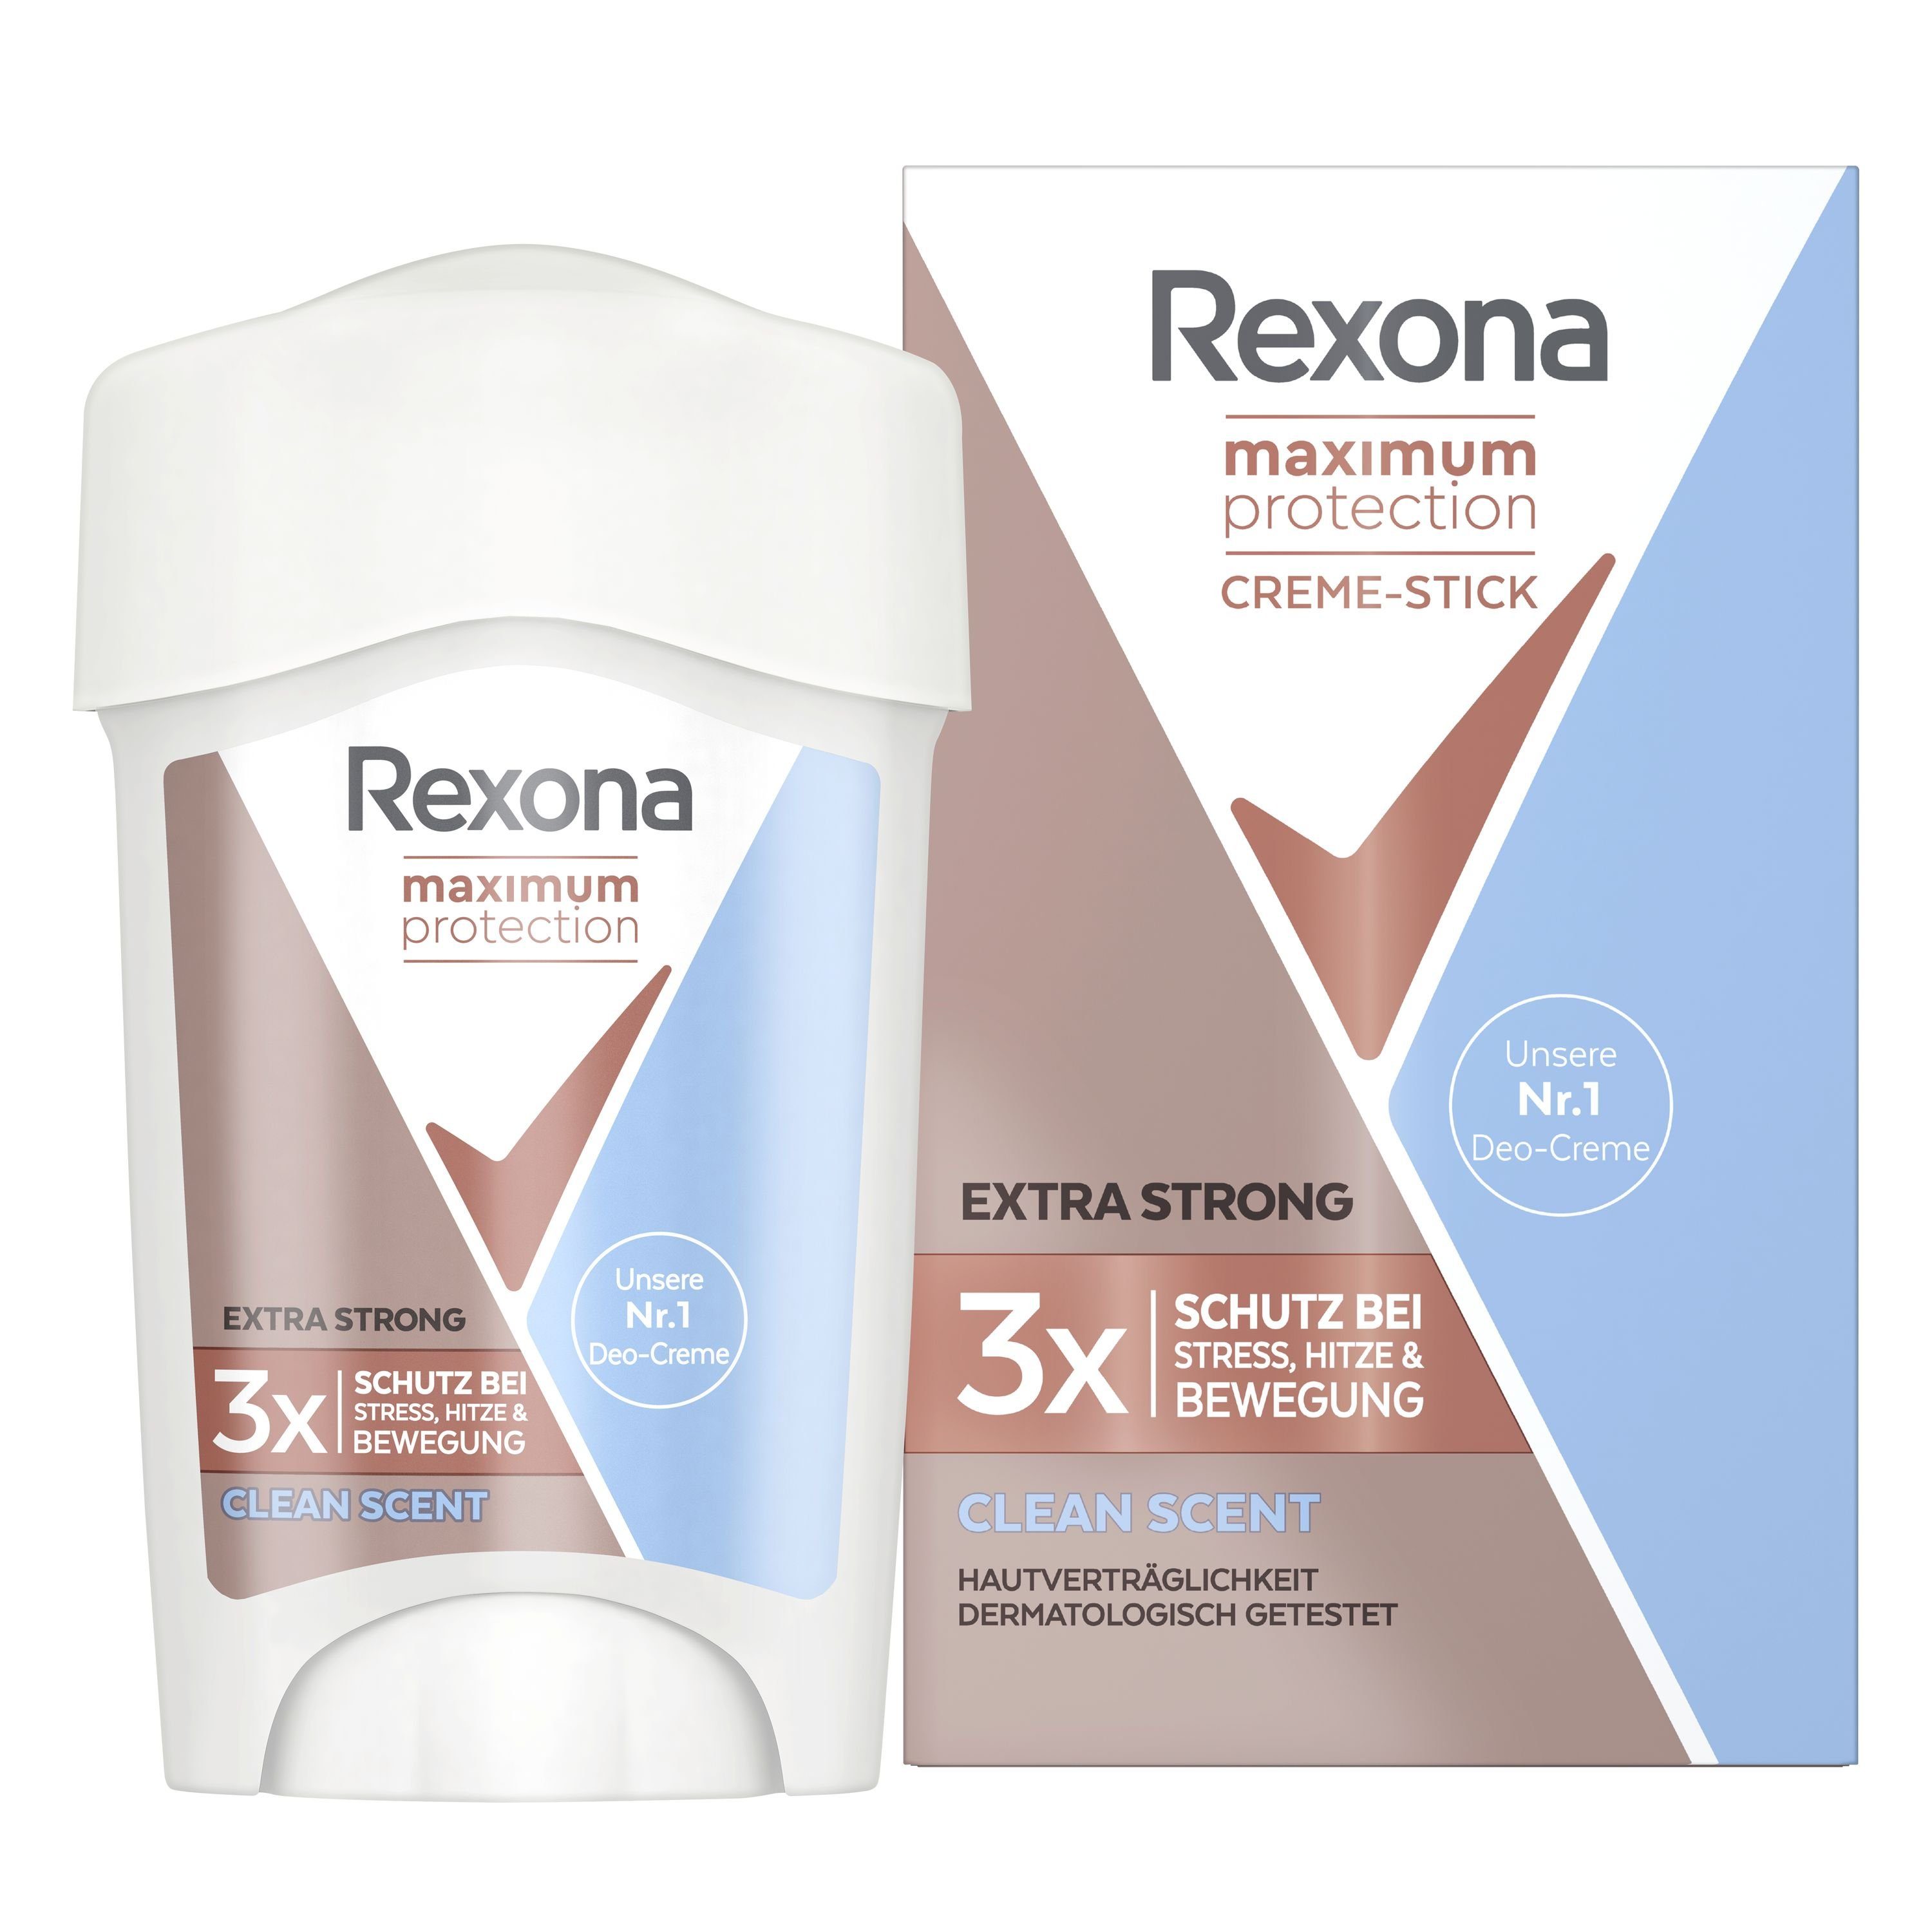 Deo-Set Maximum 7x Clean Rexona Anti-Transpirant Creme 45ml Protection Deo Scent